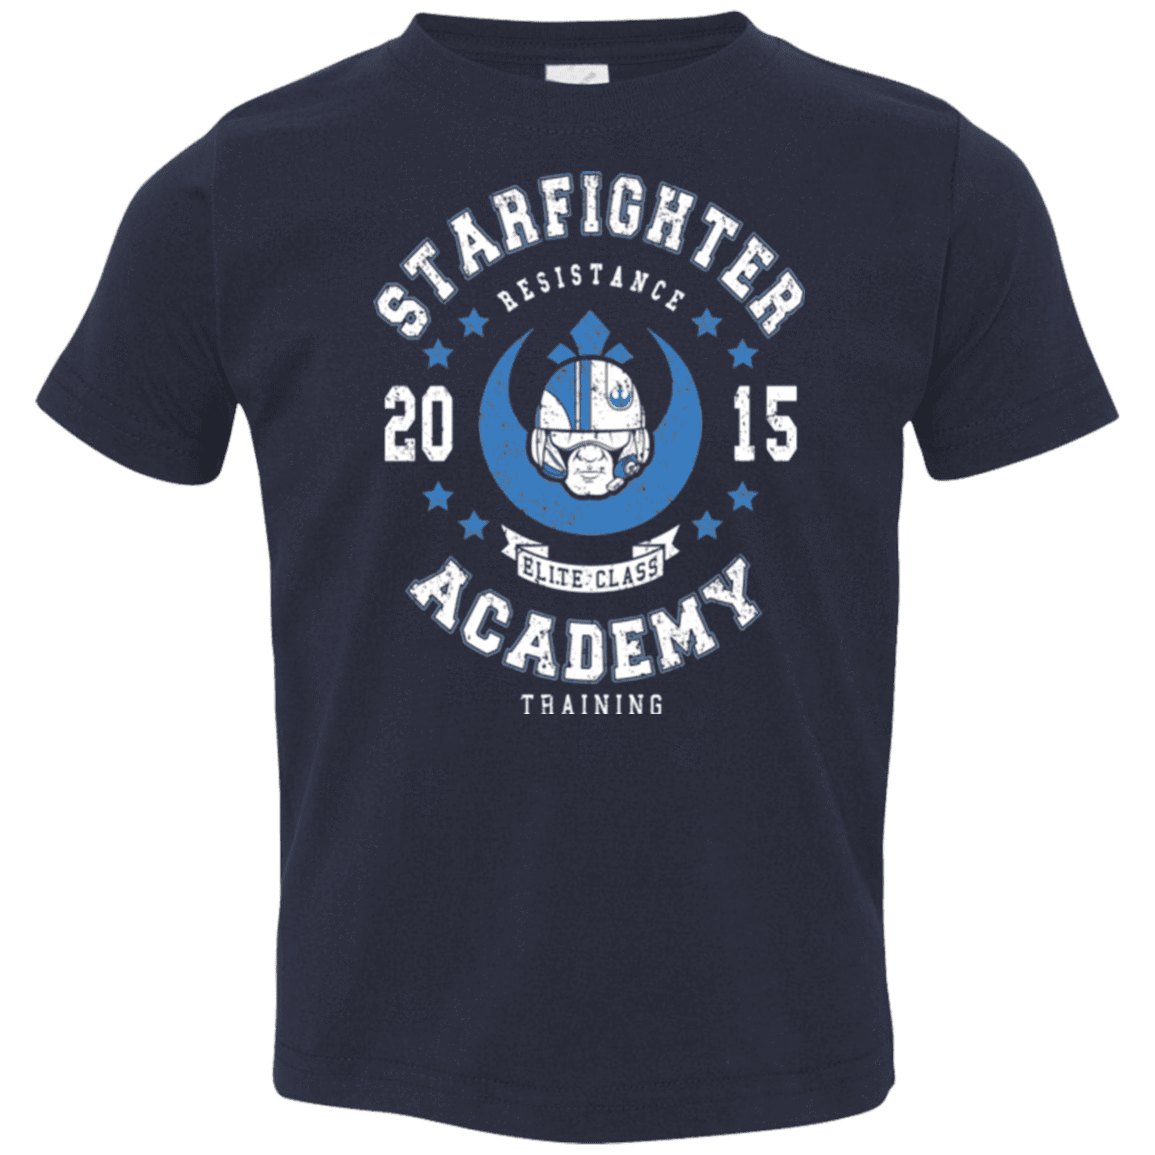 T-Shirts Navy / 2T Starfighter Academy 15 Toddler Premium T-Shirt